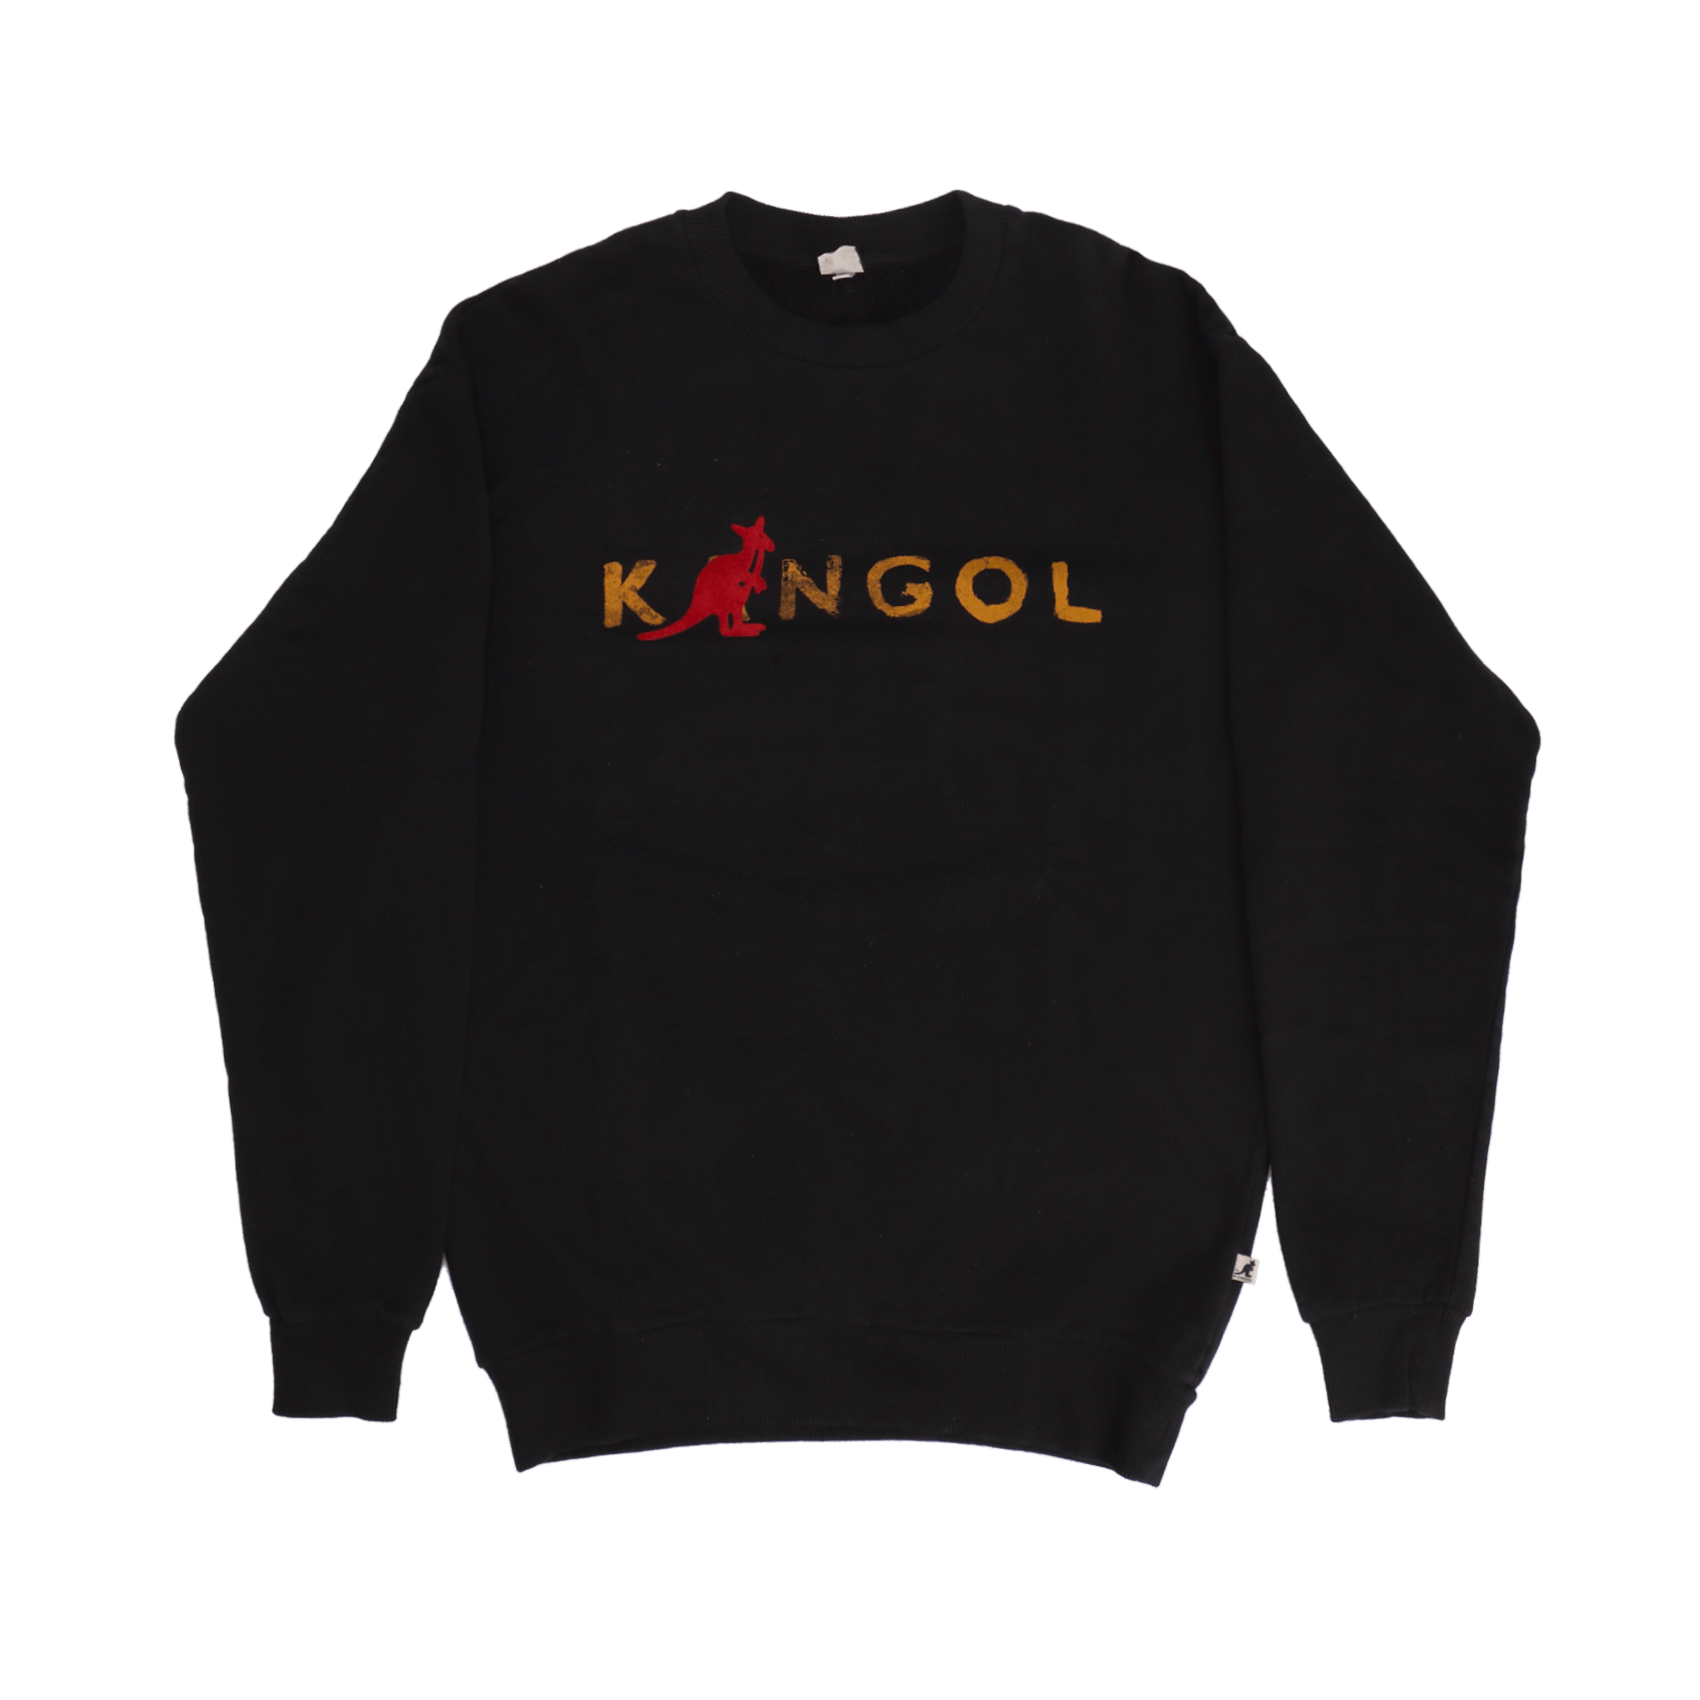 Kangol Inker Crew - Black.